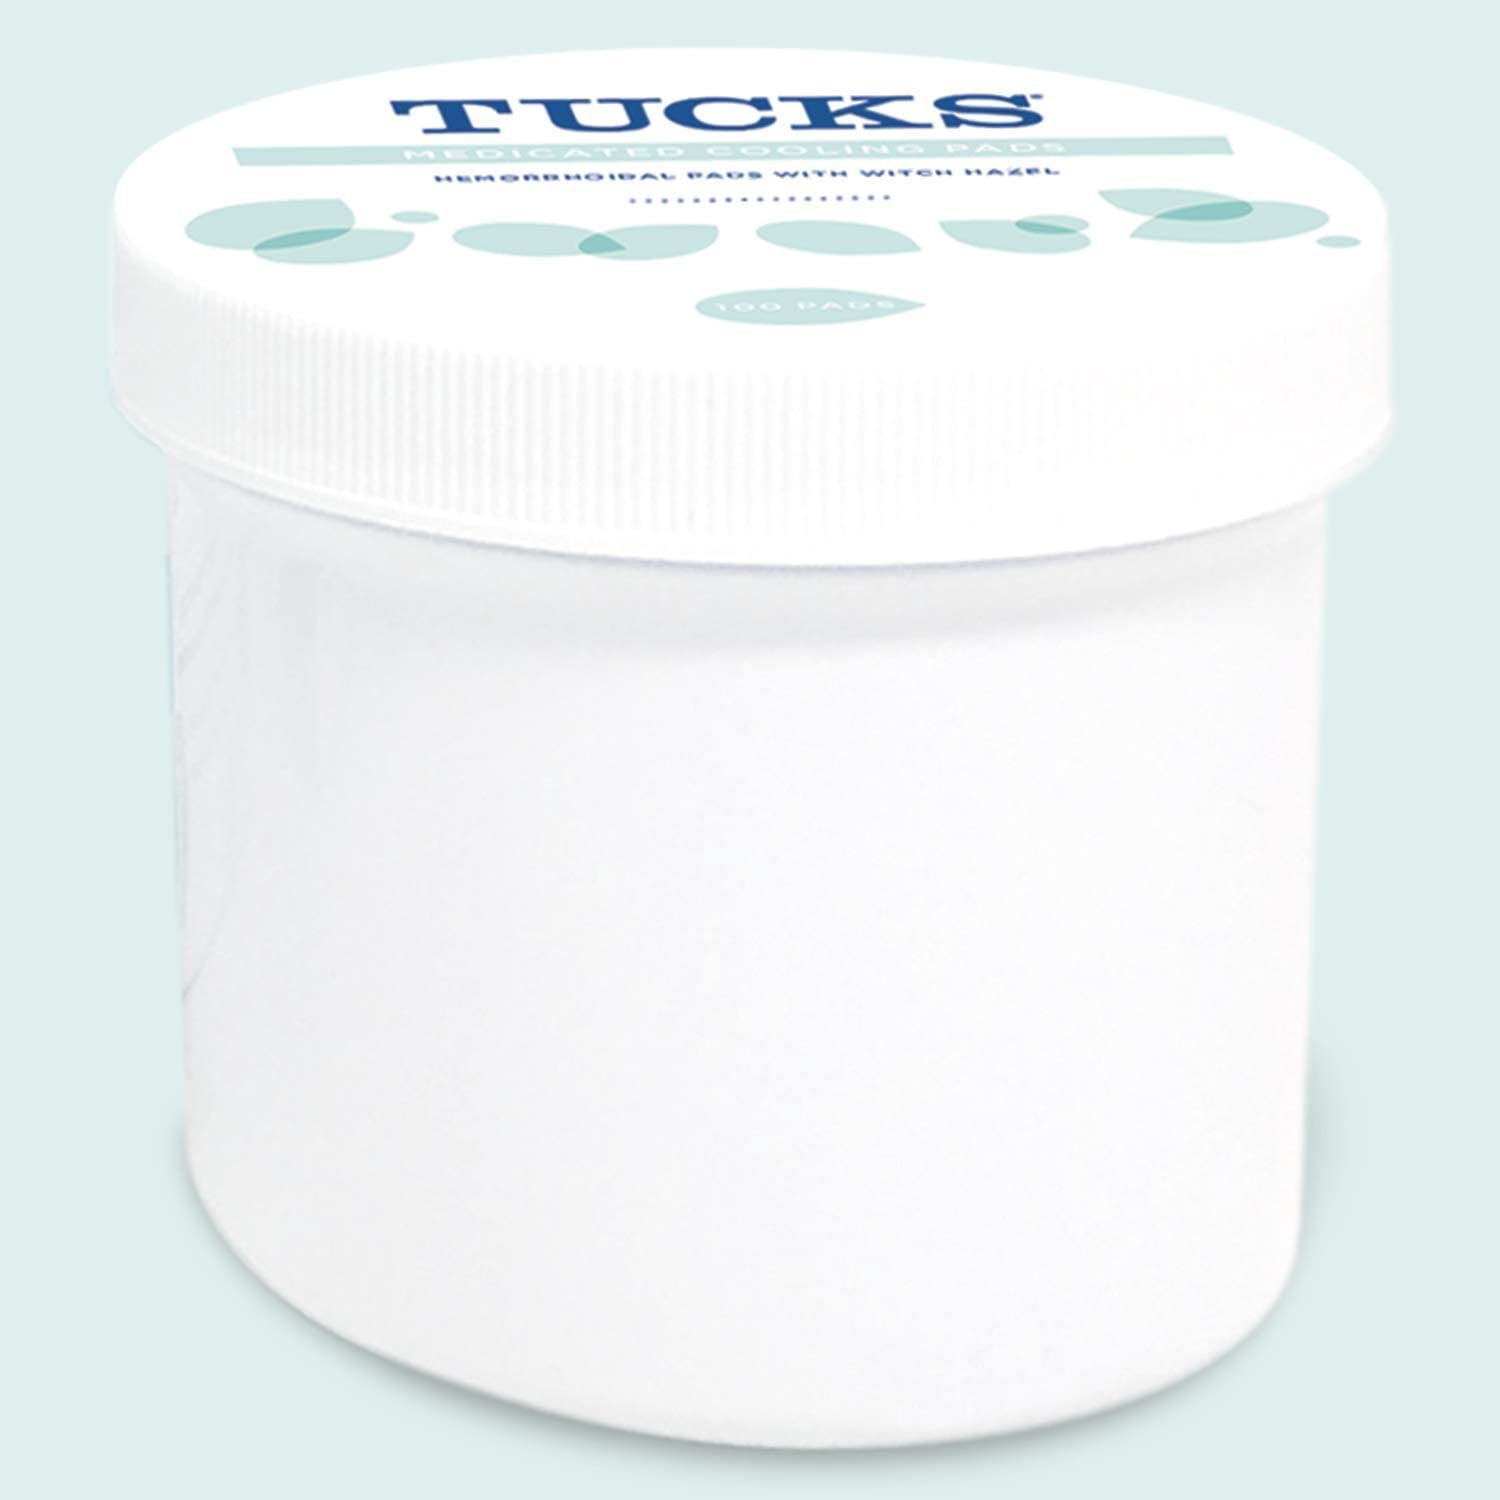 Tucks® Hemorrhoid Relief Pad 40 per Box